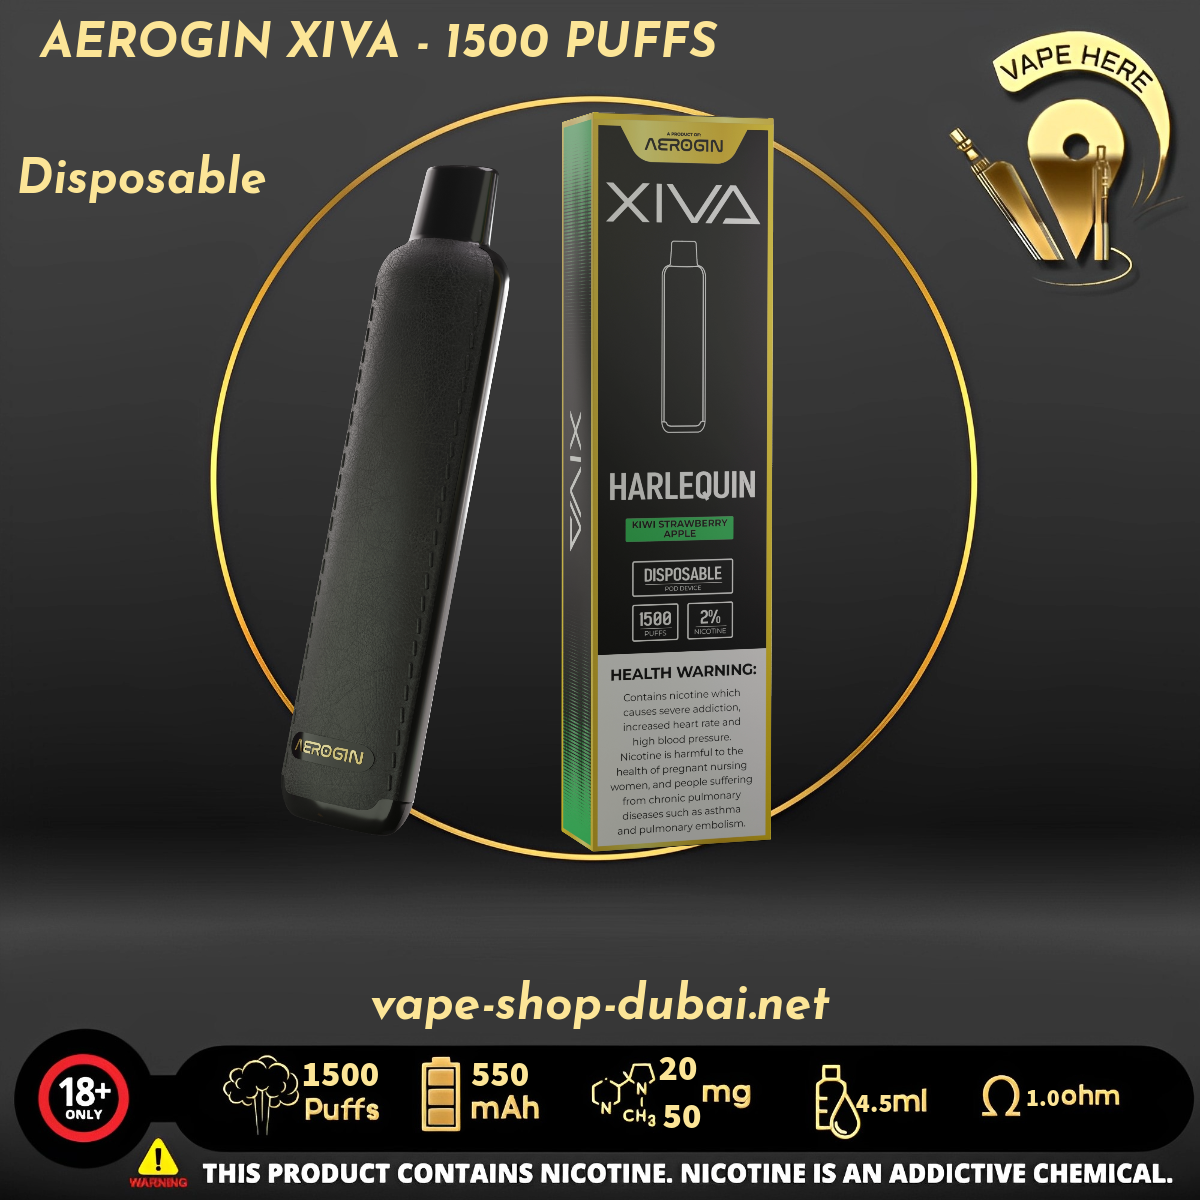 AEROGIN XIVA - 1500 PUFFS (20MG&50MG) DISPOSABLE VAPE